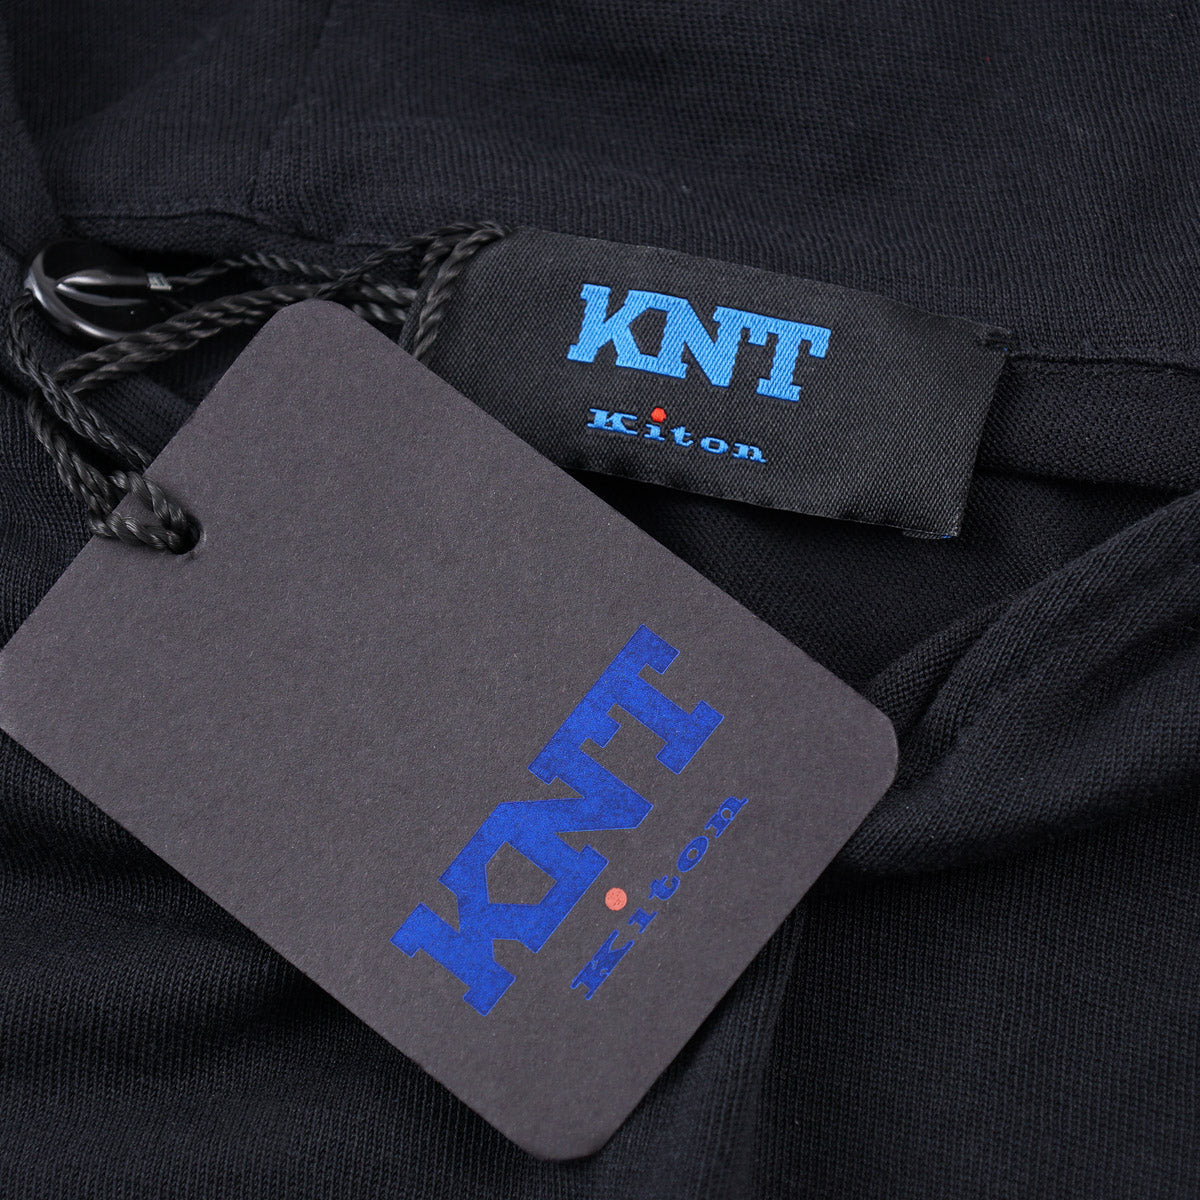 Kiton KNT Hooded Lightweight Cotton Sweater - Top Shelf Apparel